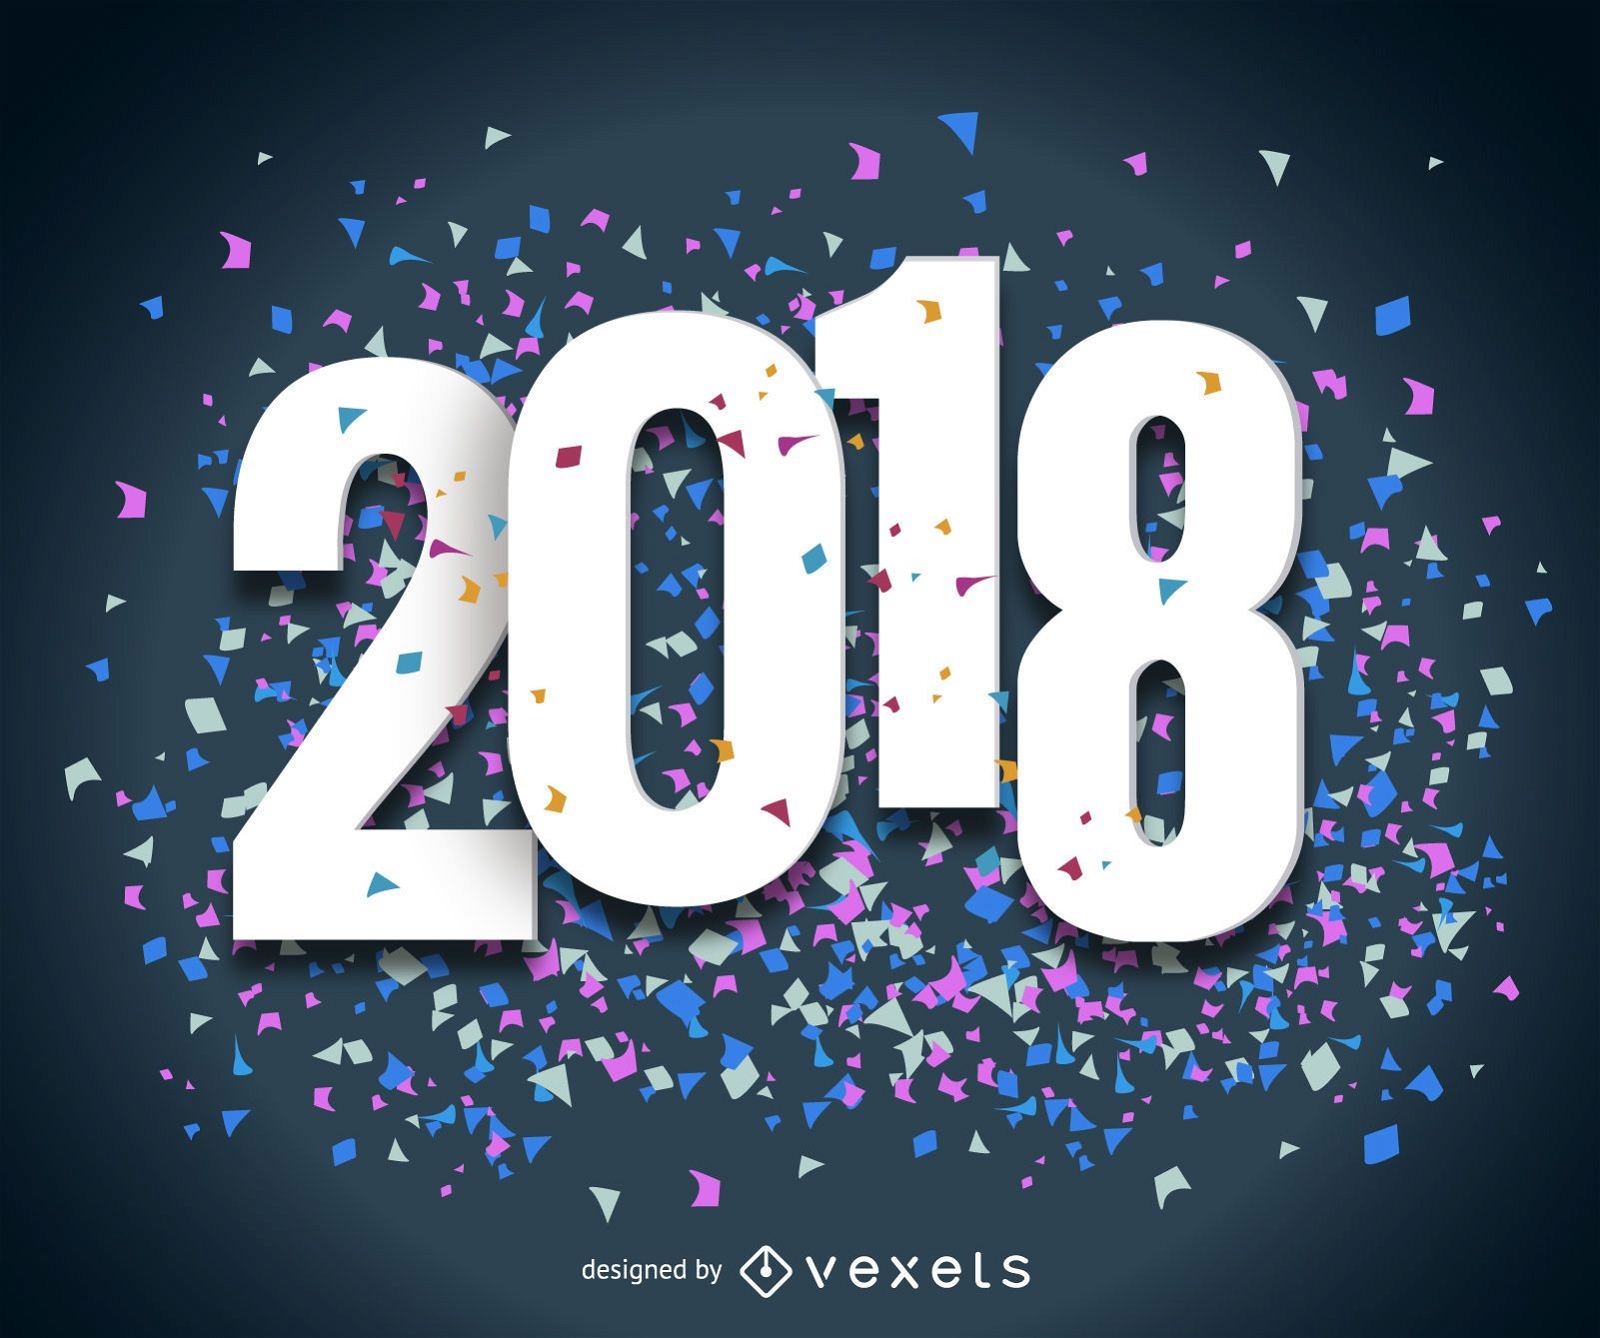 Big 2018 New Year sign